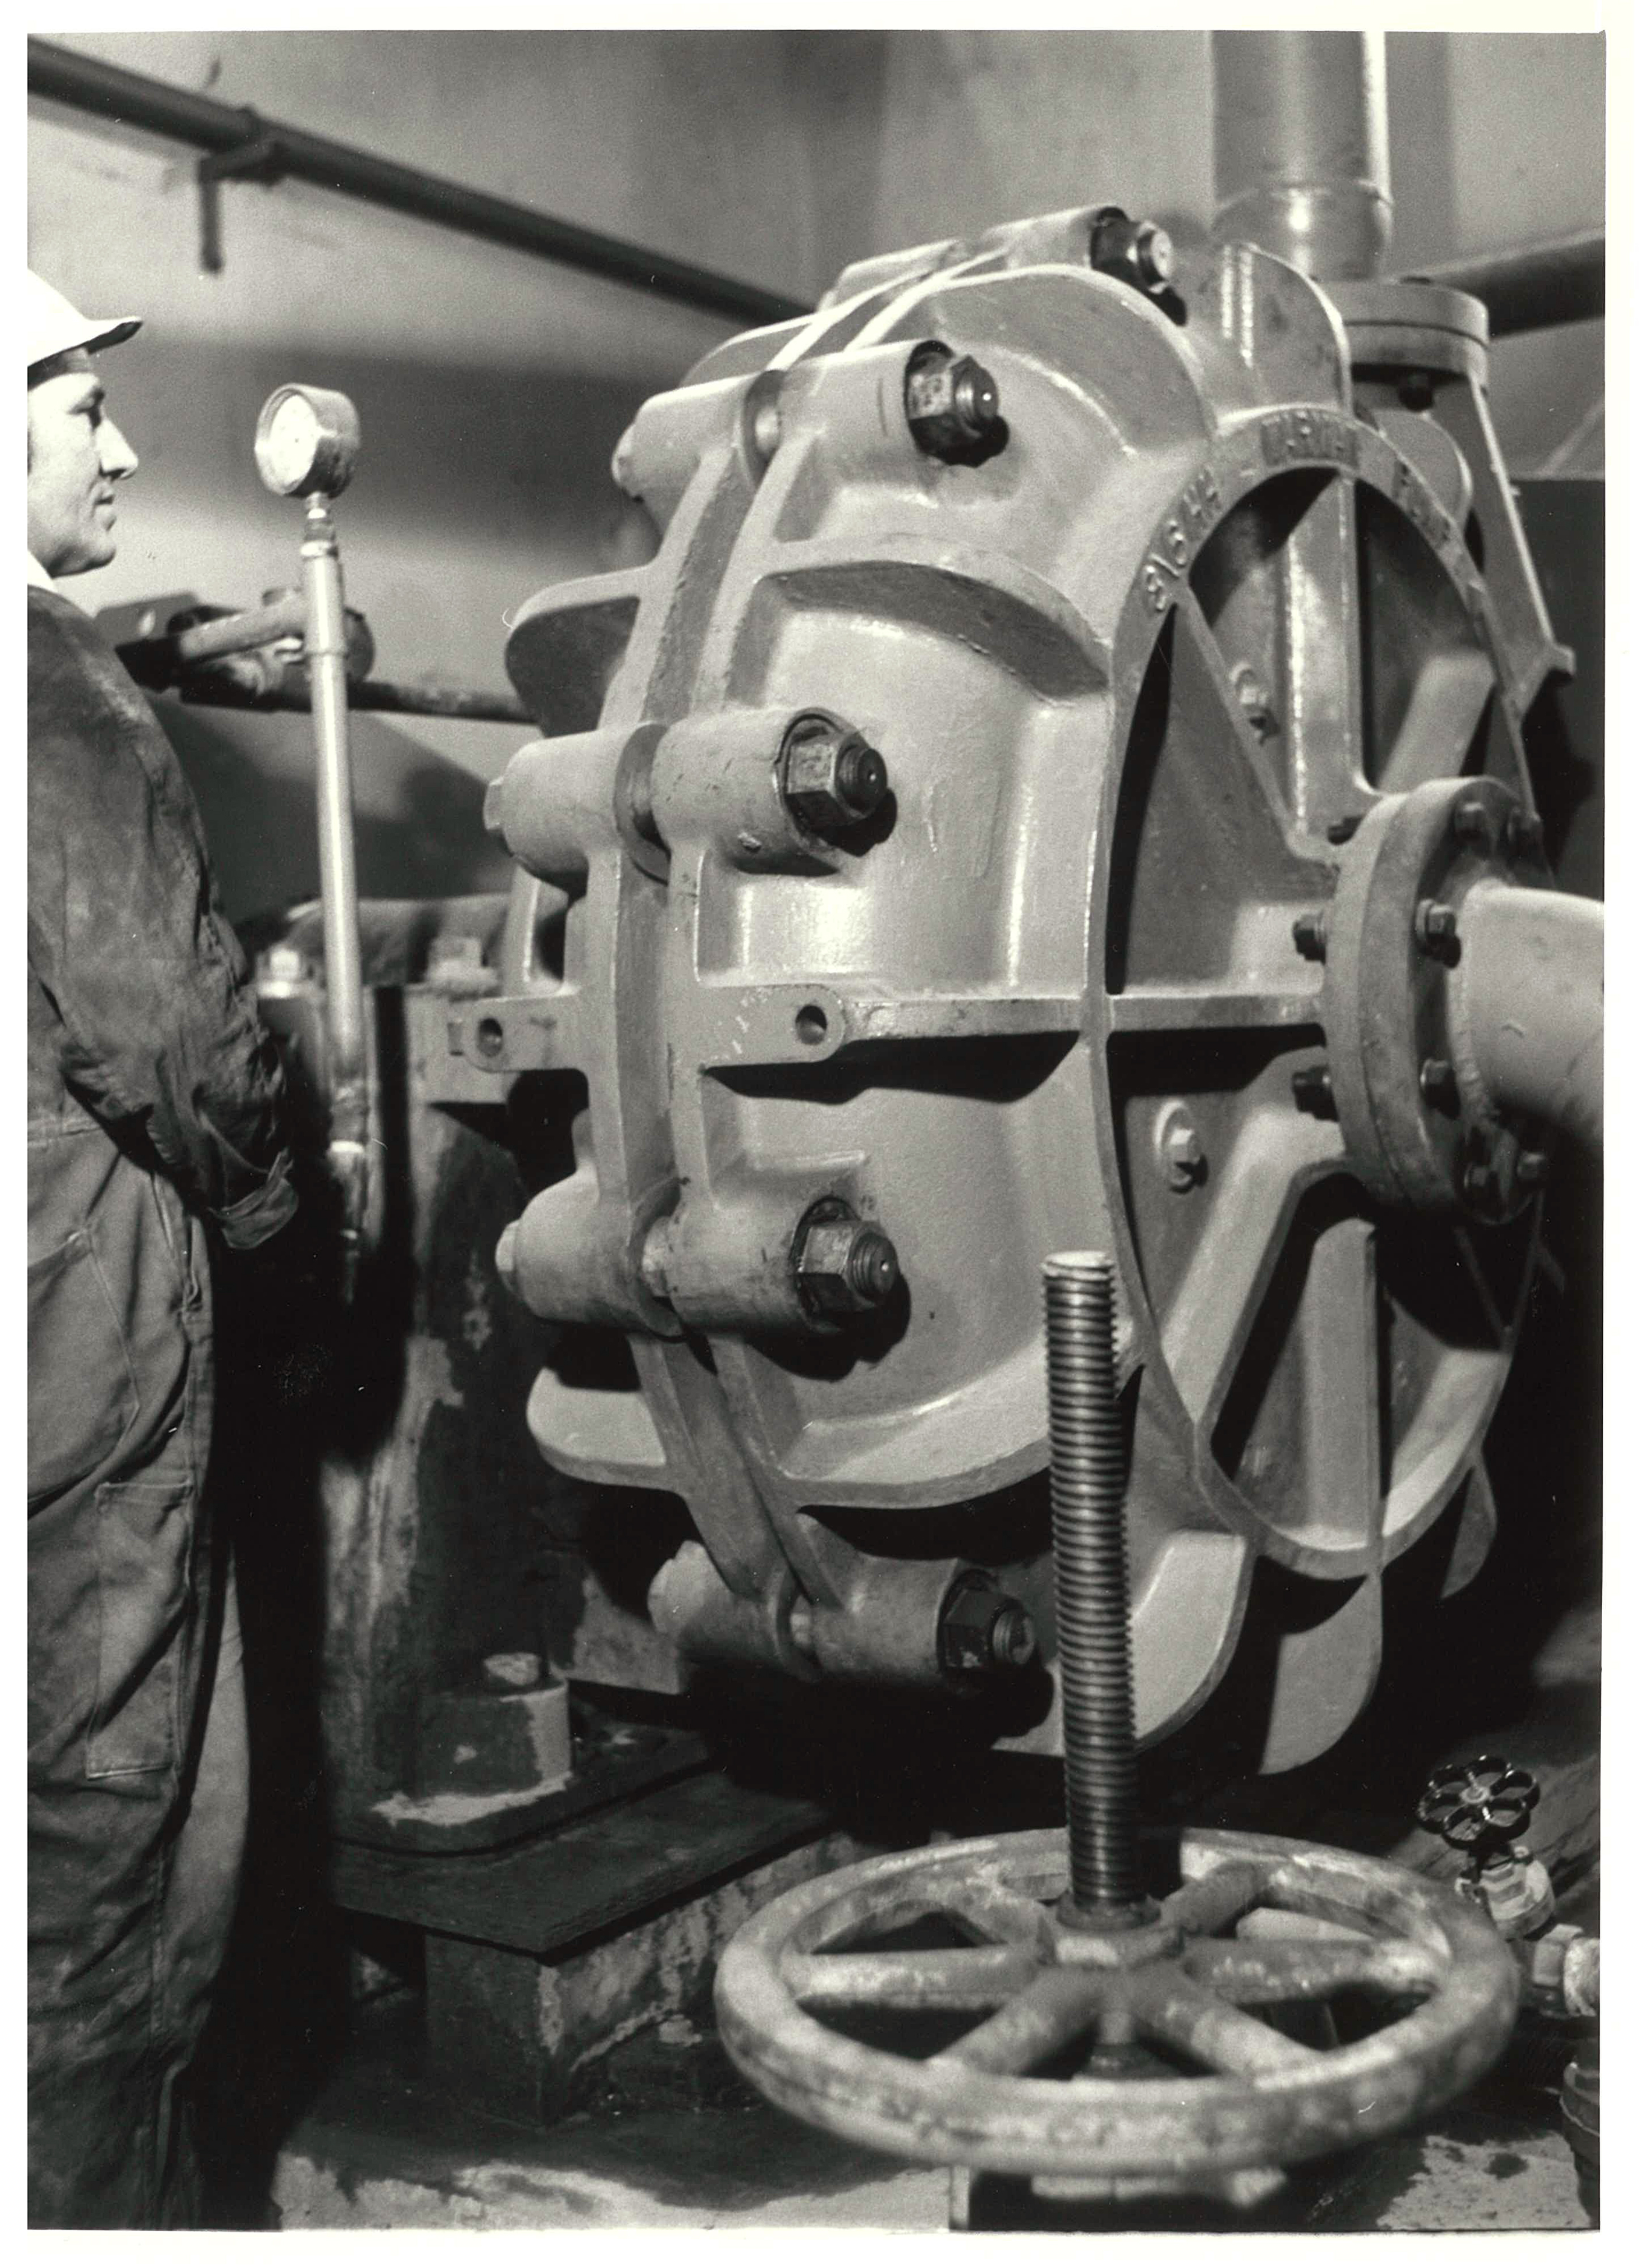 A Warman pump in the 1950s.